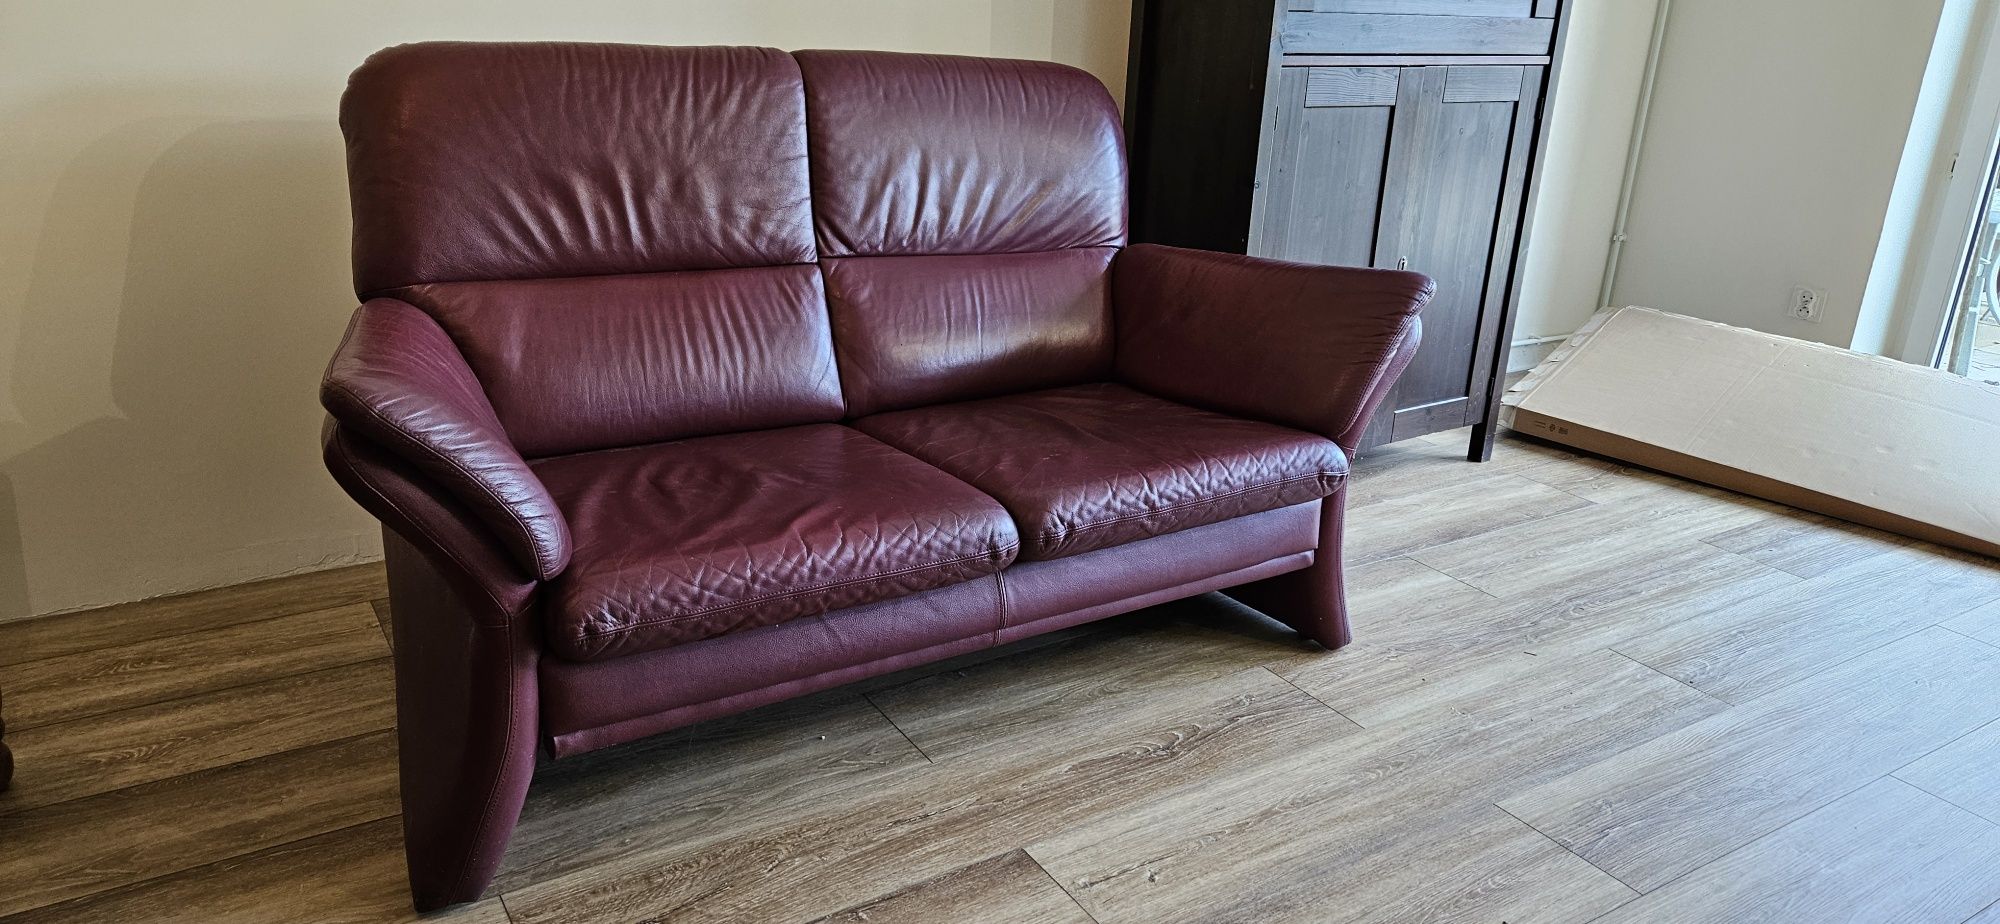 Piękna skórzana sofa